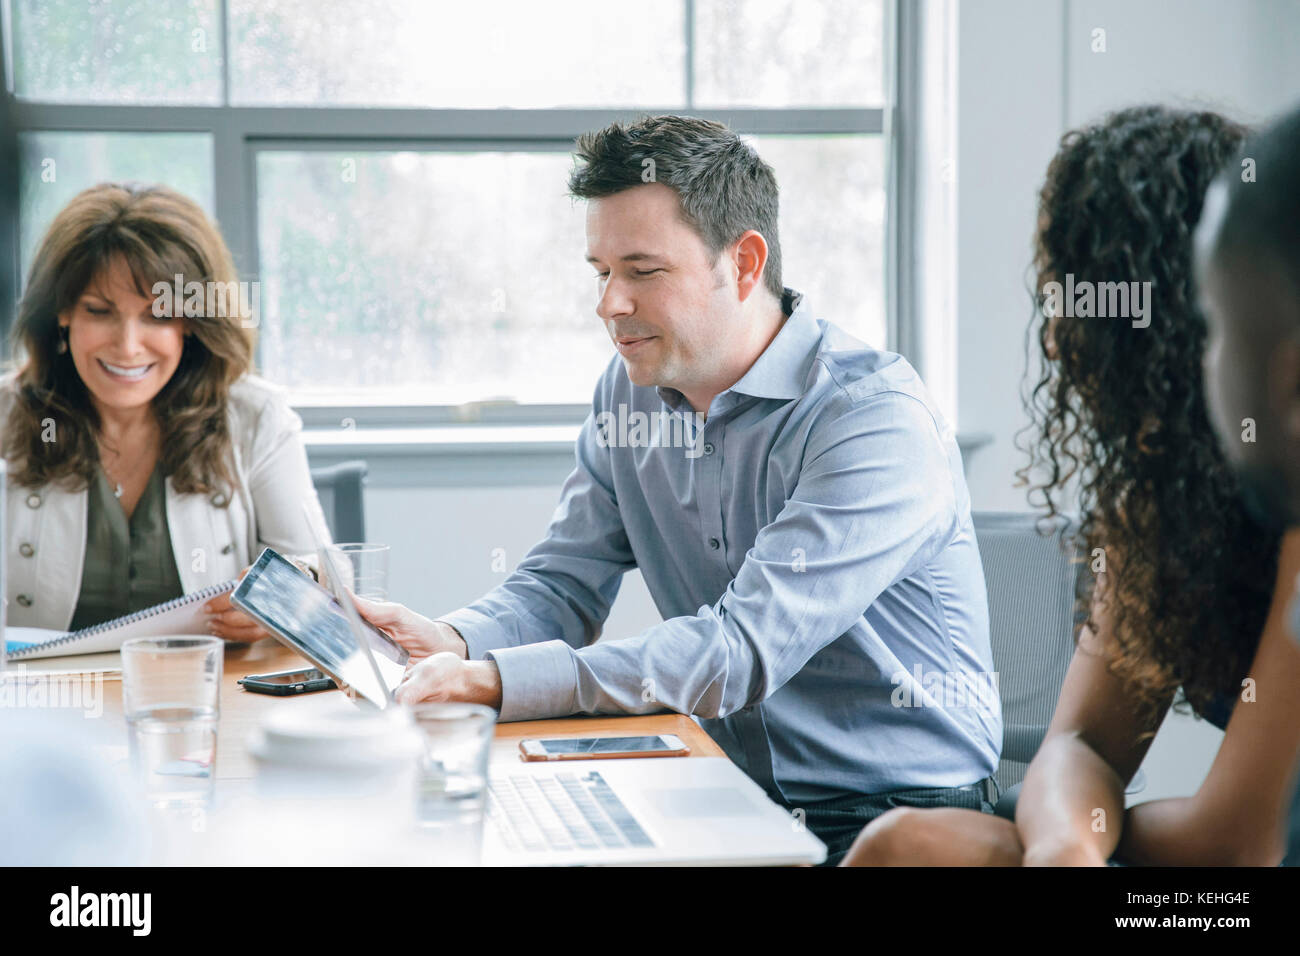 Business people using digital tablet in meeting Stock Photo